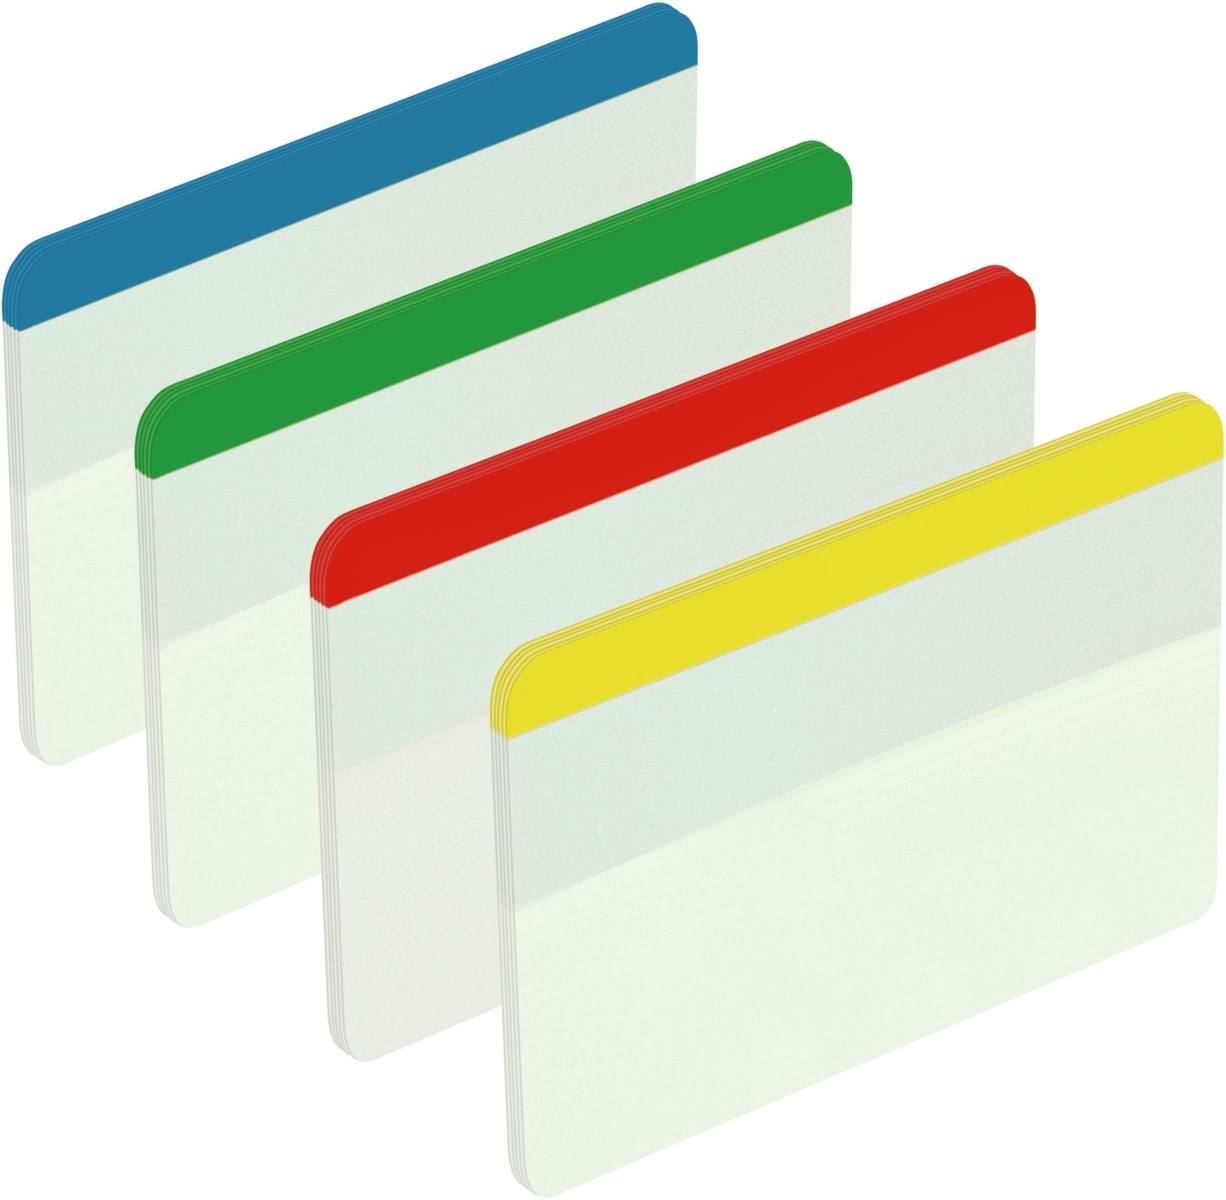 3M Post-it Index Strong 686-F1EU, 50,8 mm x 38 mm, blauw, geel, groen, rood, 4 x 6 zelfklevende strips